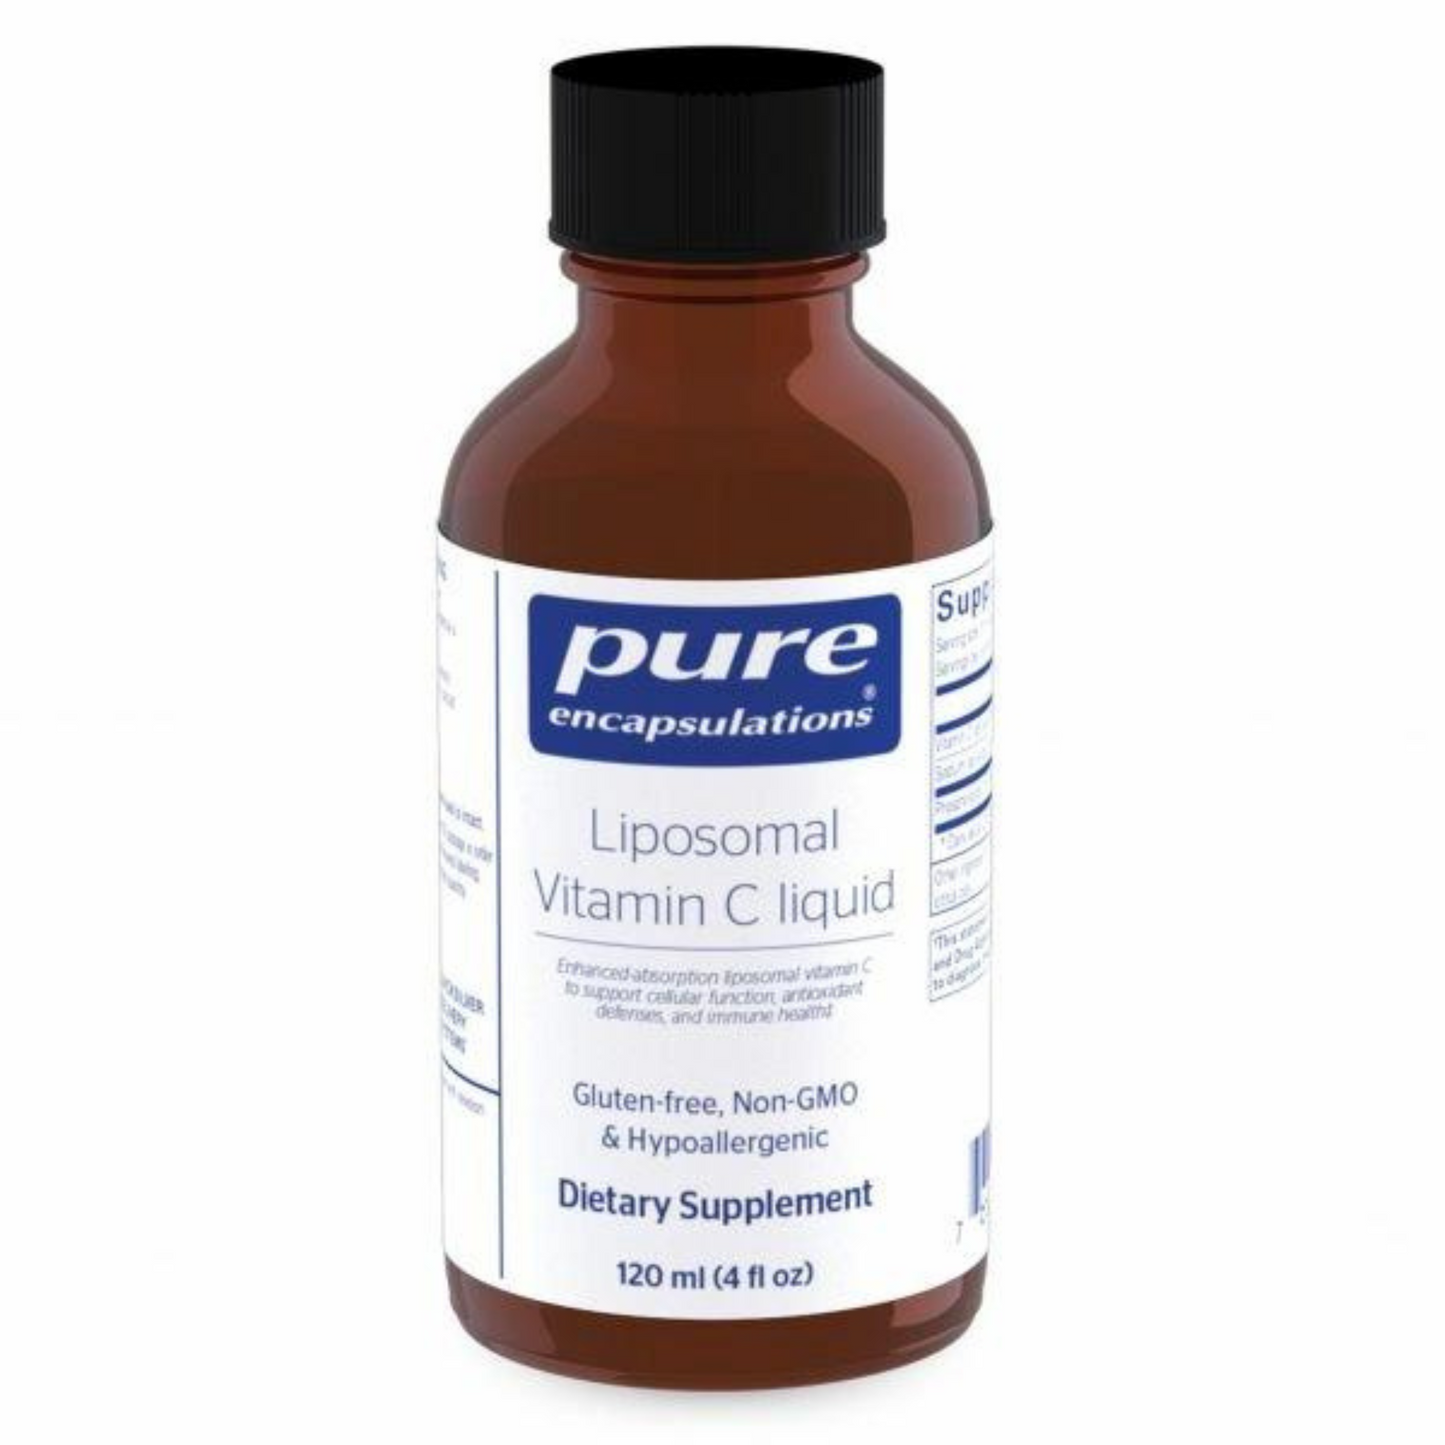 Primary Image of Liposomal Vitamin C liquid (4 fl oz)